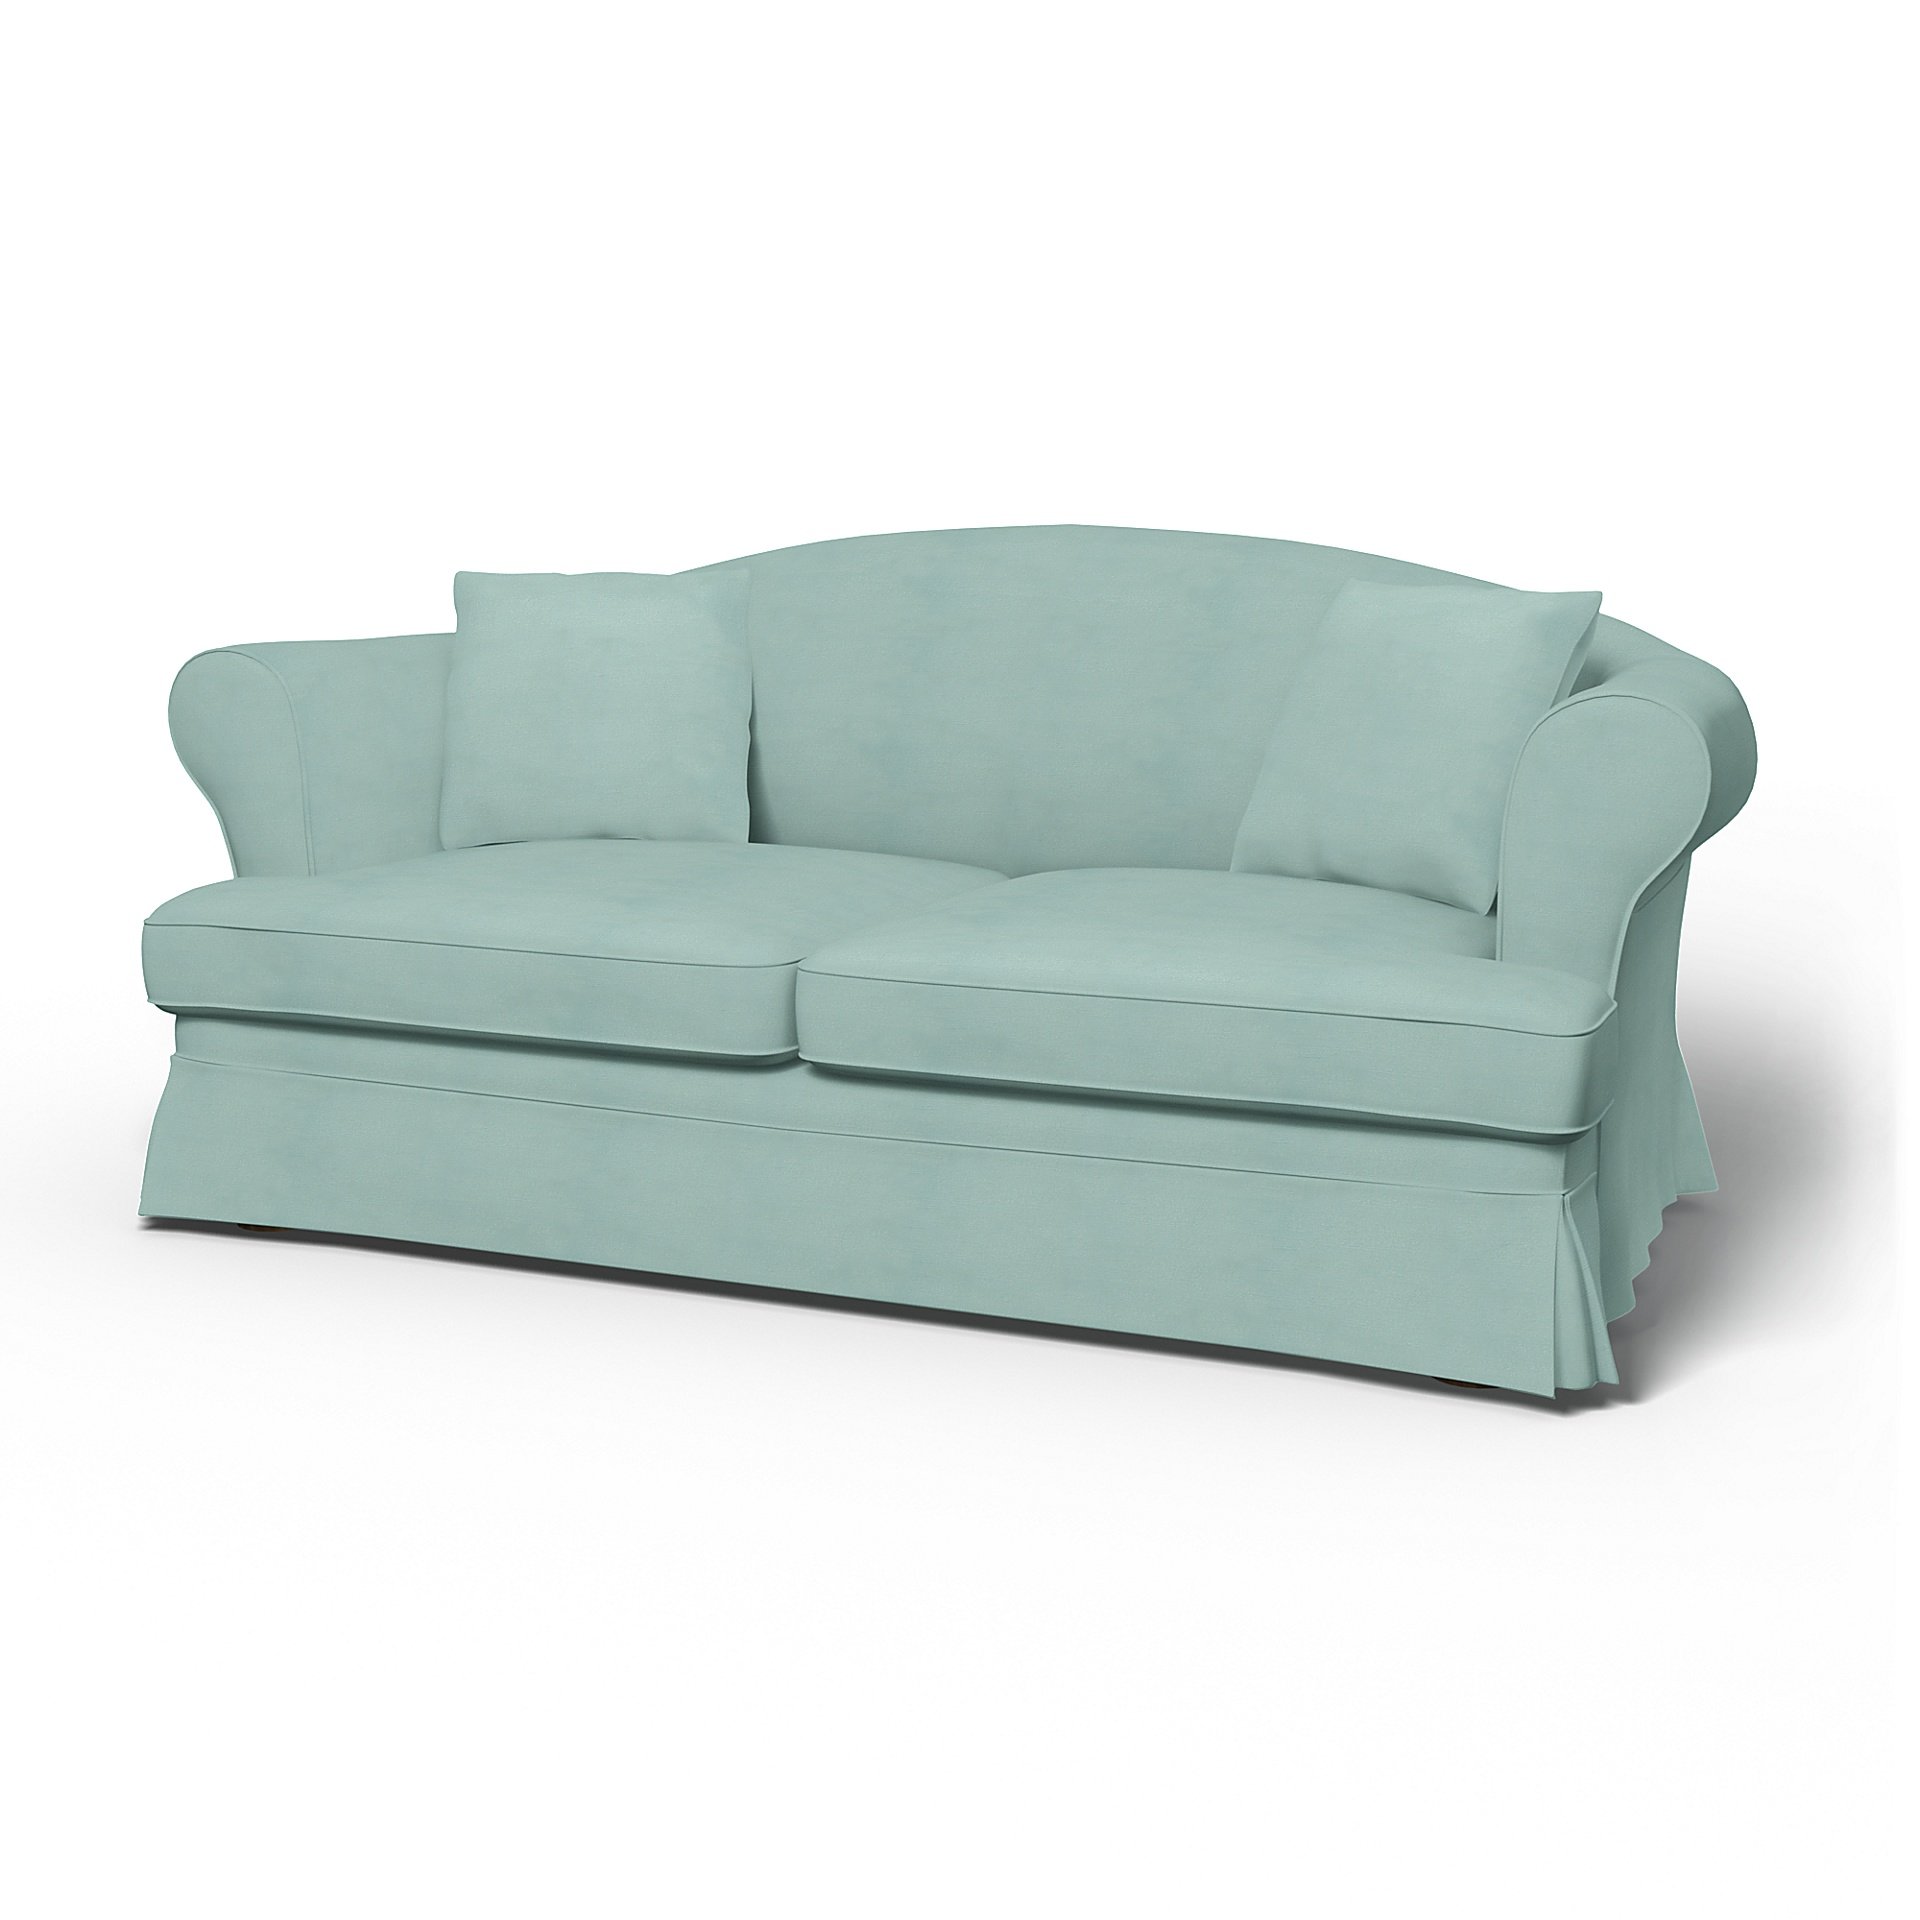 IKEA - Sundborn Sofa Bed Cover, Mineral Blue, Linen - Bemz